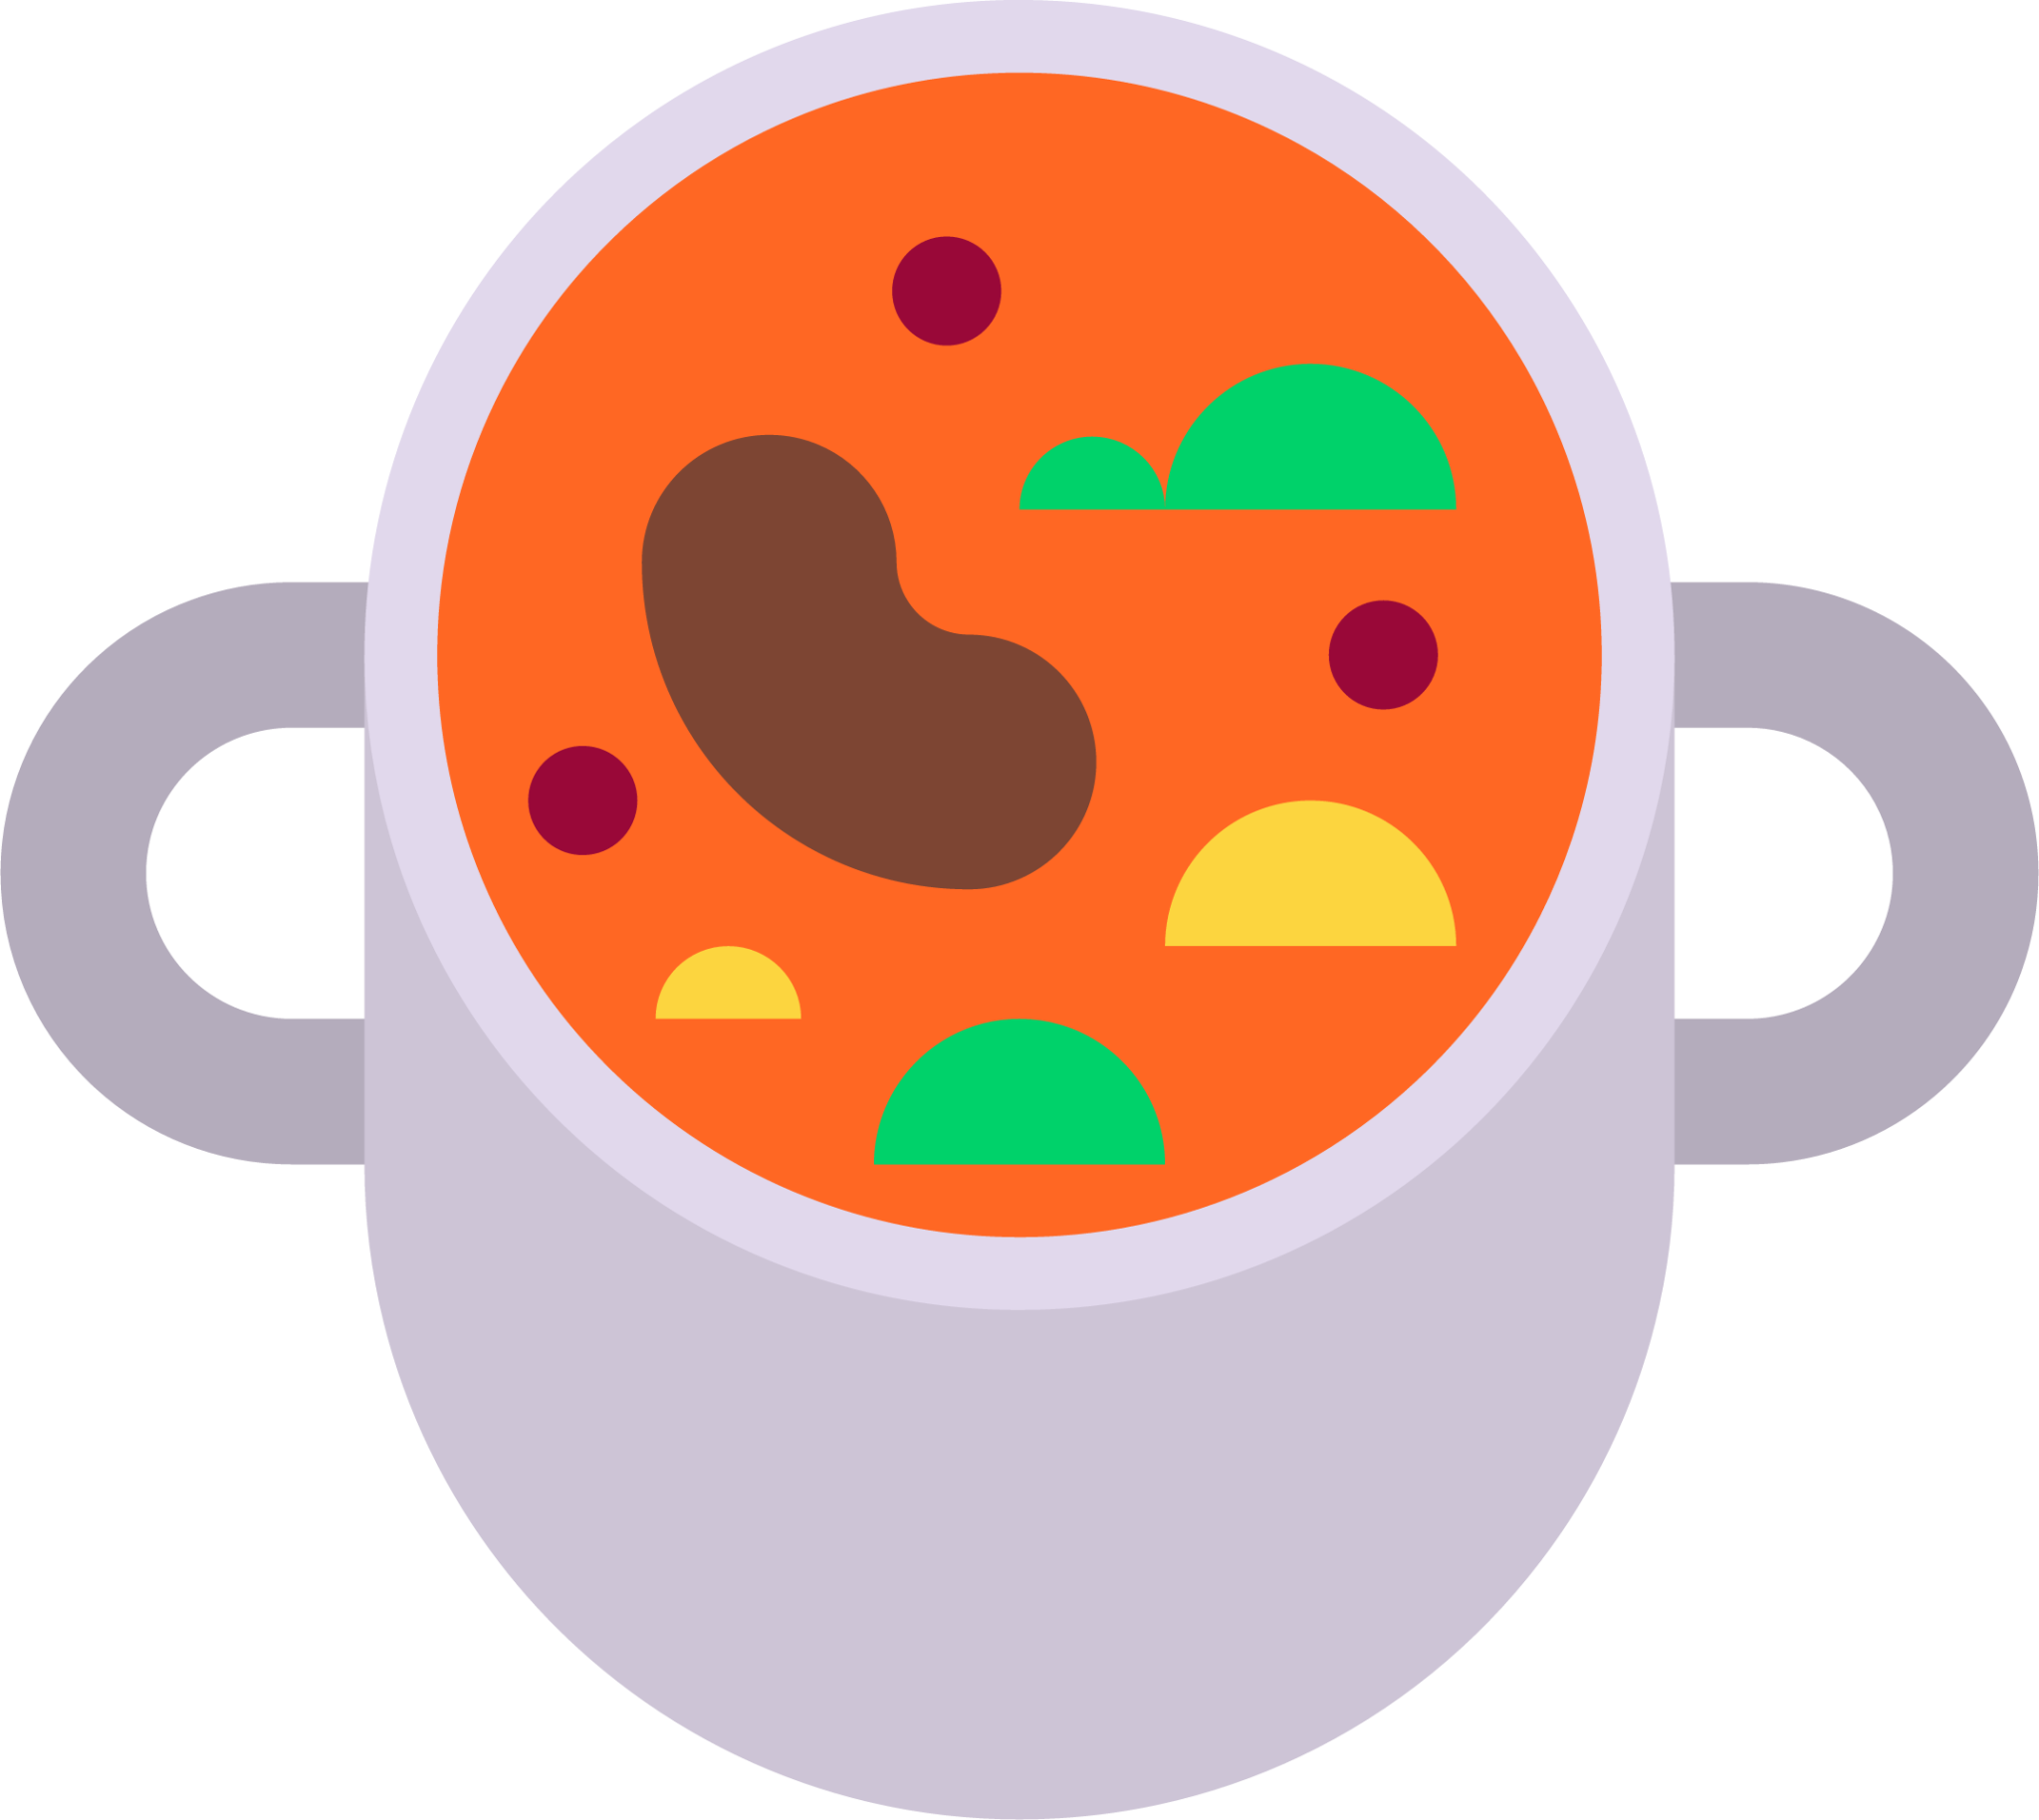 pot of food emoji